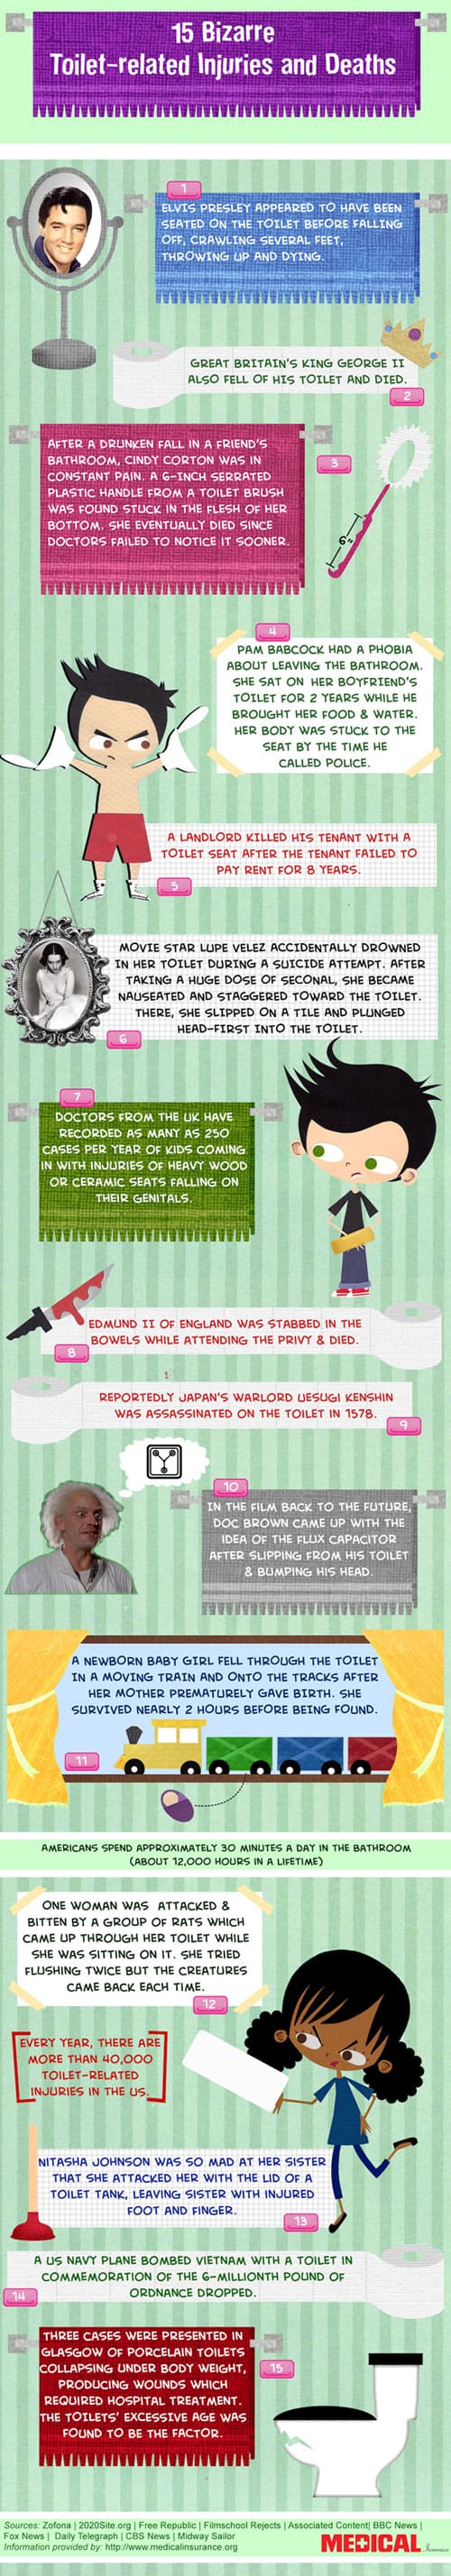 Toilets-infographic